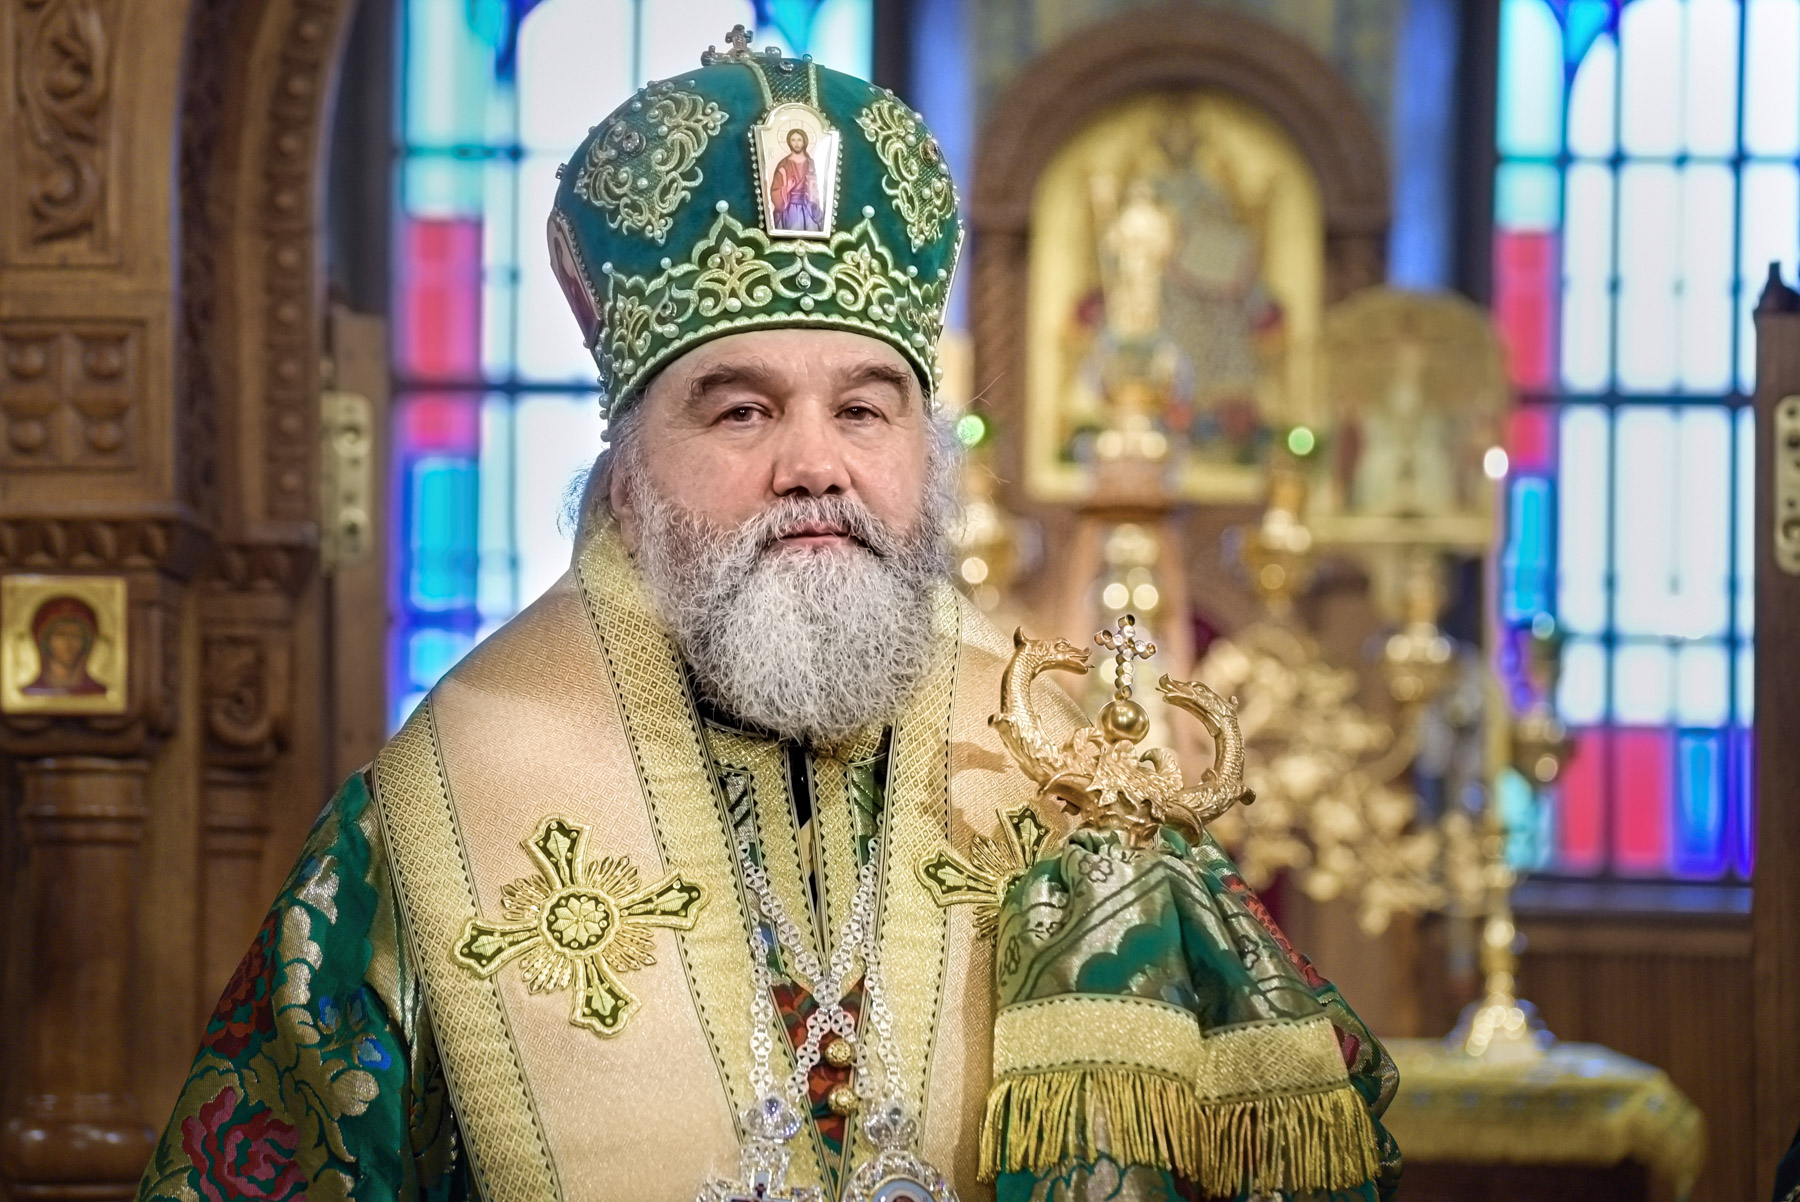 photos of orthodox christmas 0275 1